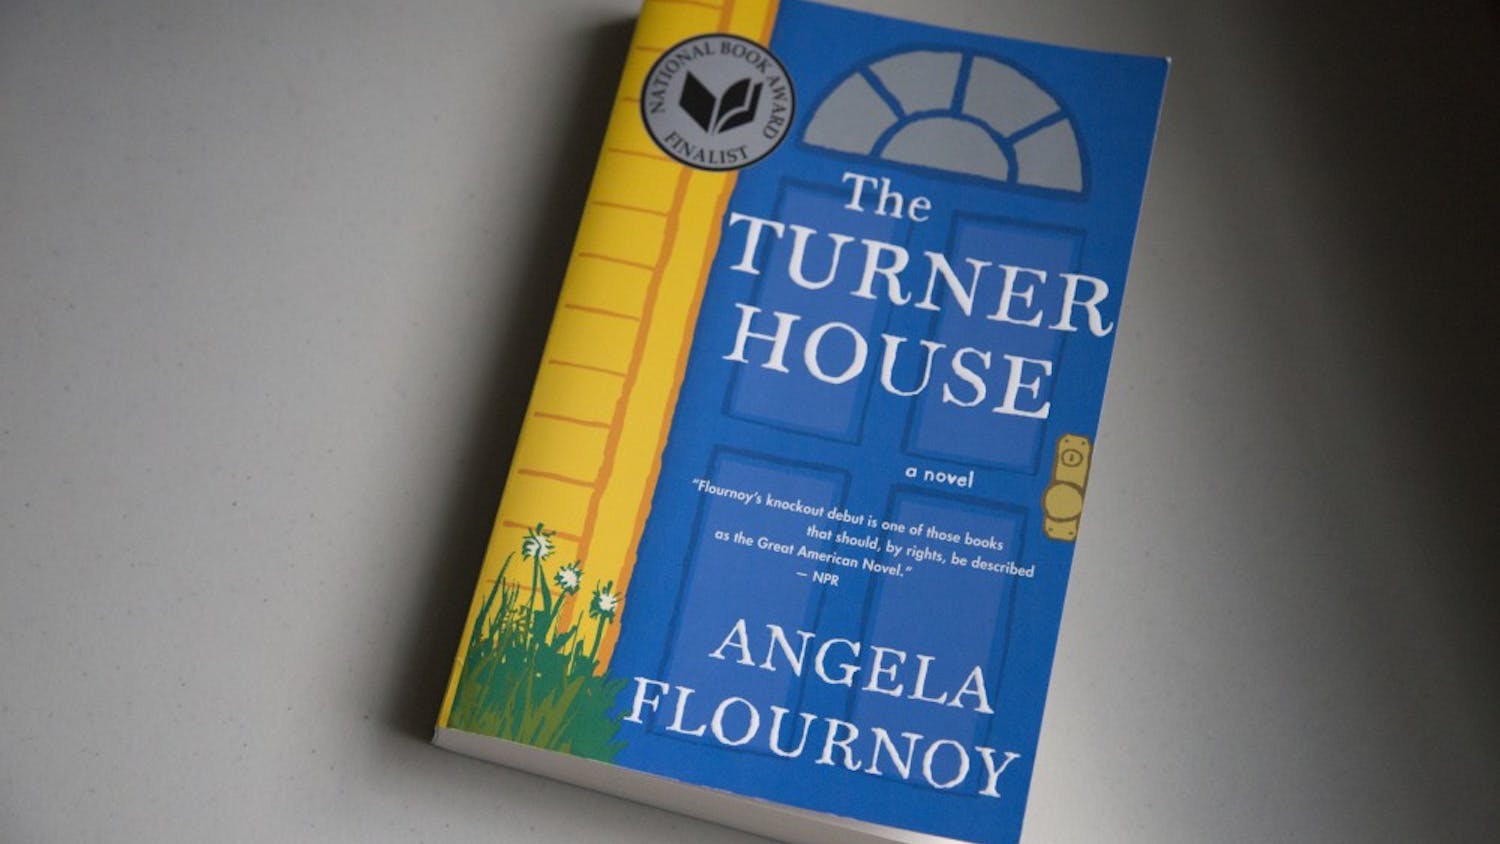 The Turner House by Angela Flournoy 